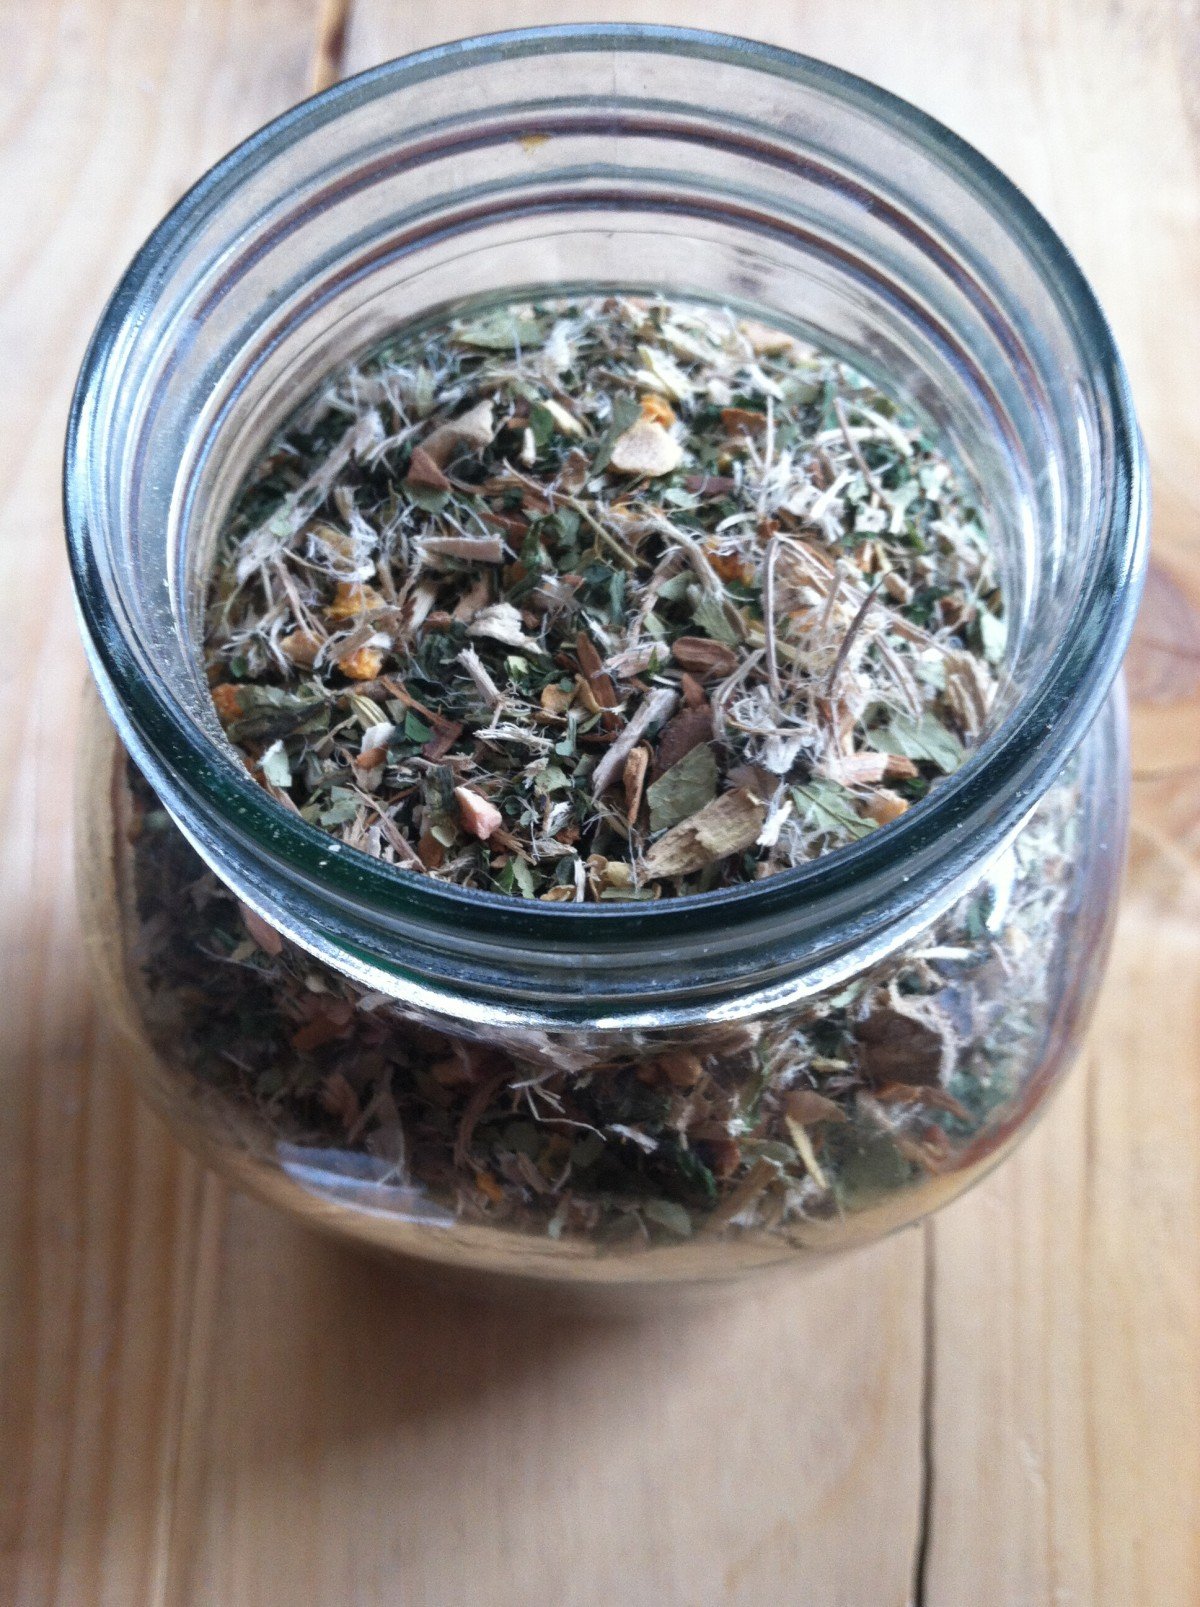 weight loss herbs